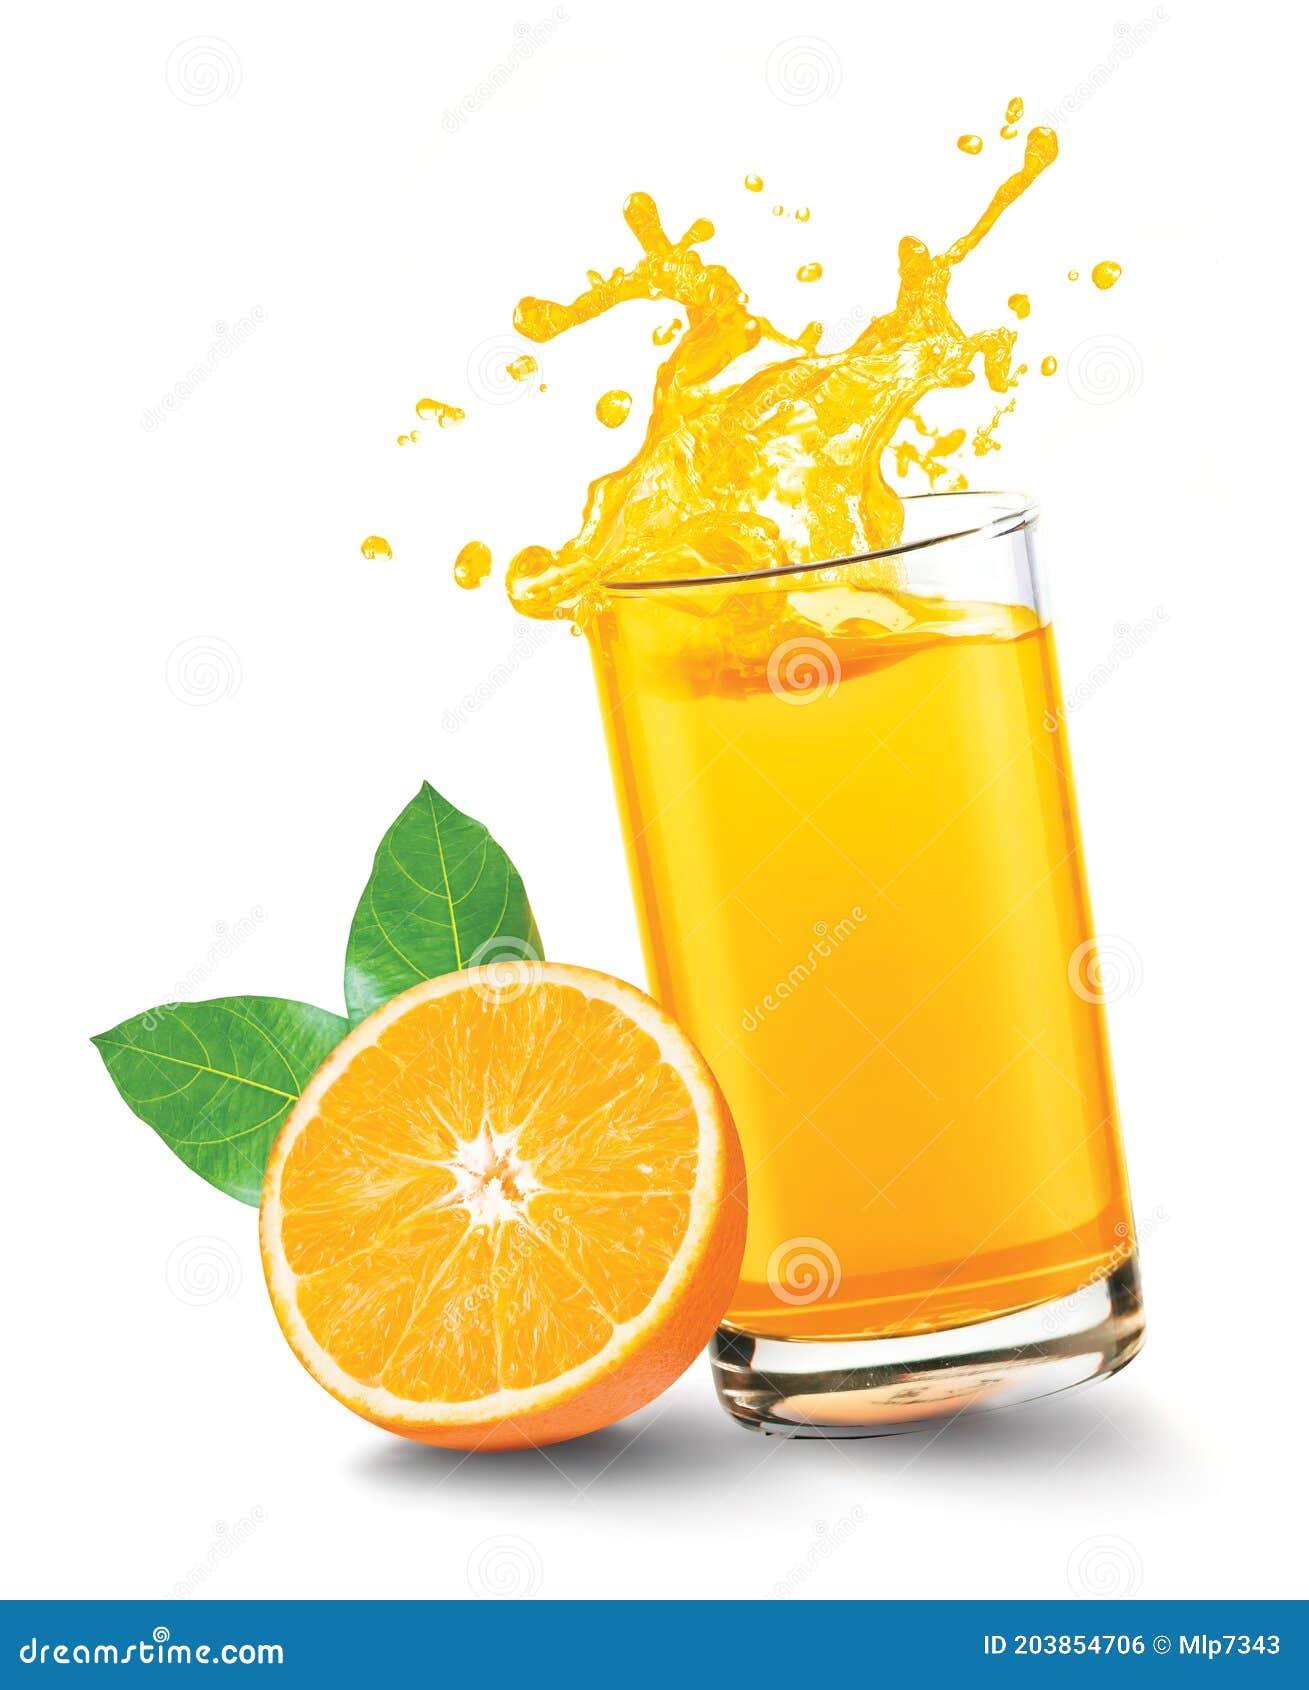 https://thumbs.dreamstime.com/z/orange-juice-splash-out-glass-fruit-isolated-white-background-203854706.jpg